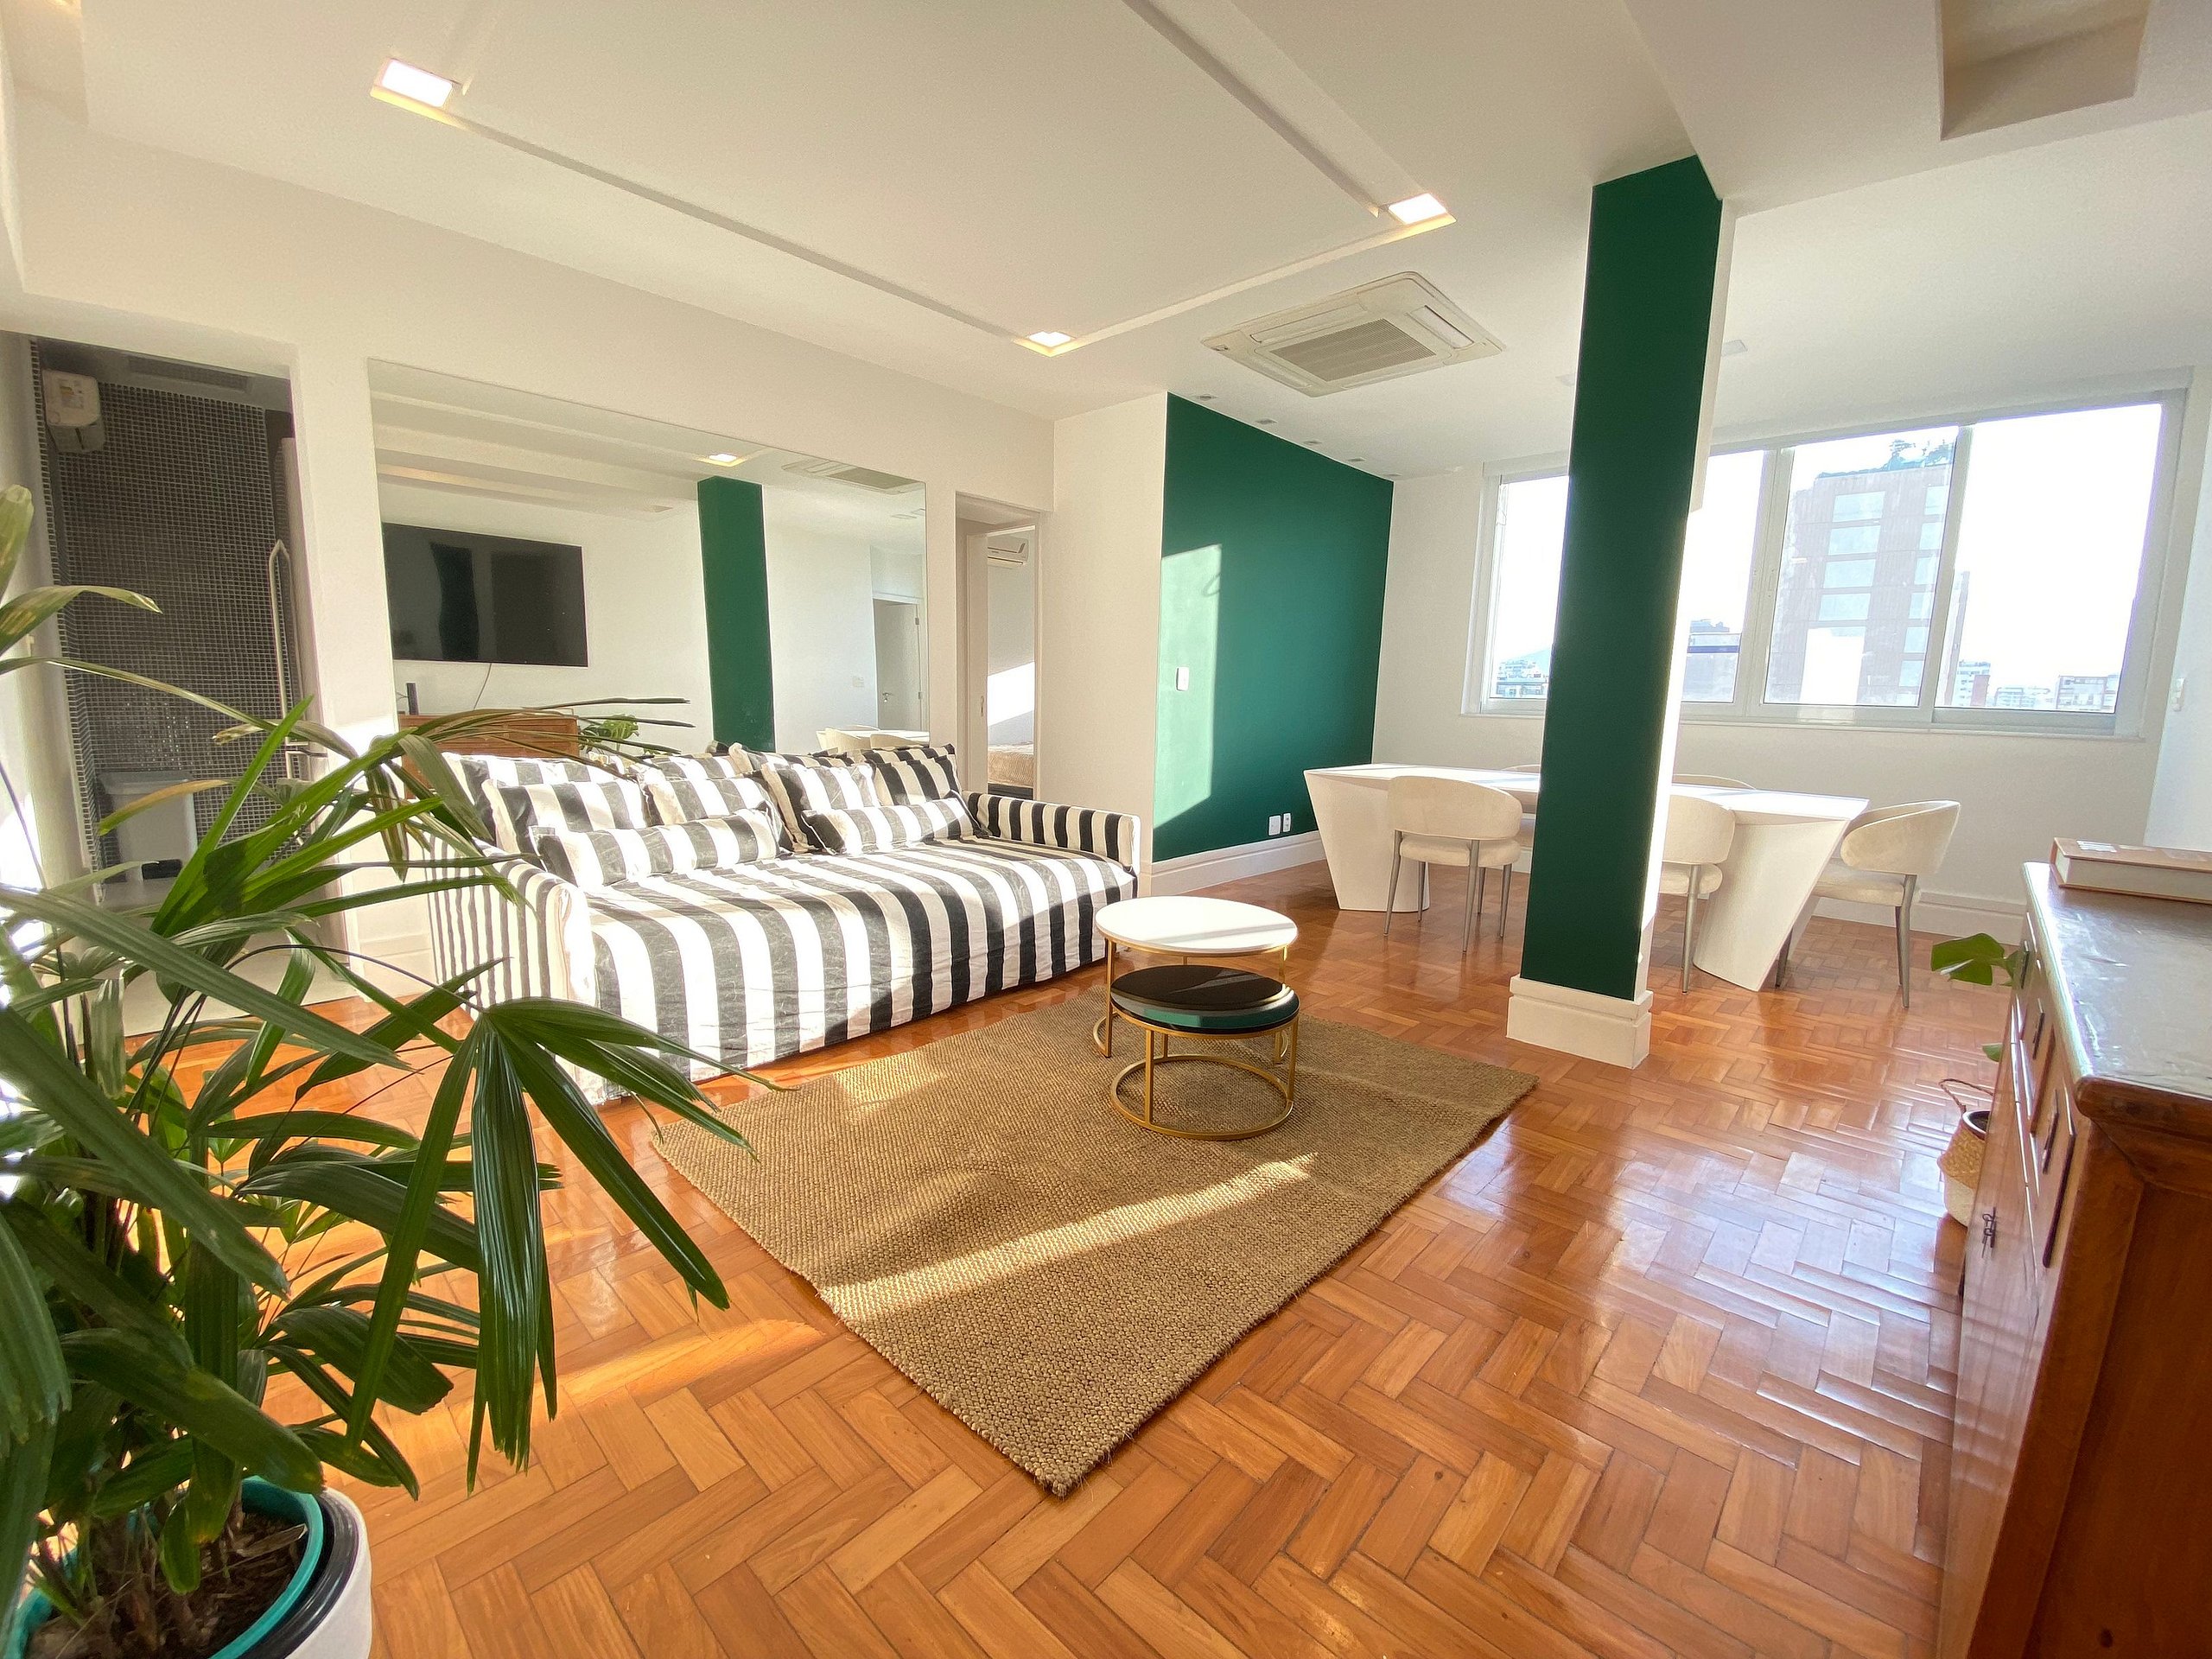 Property Image 1 - Renovated apartment near Ipanema beach with 89m2